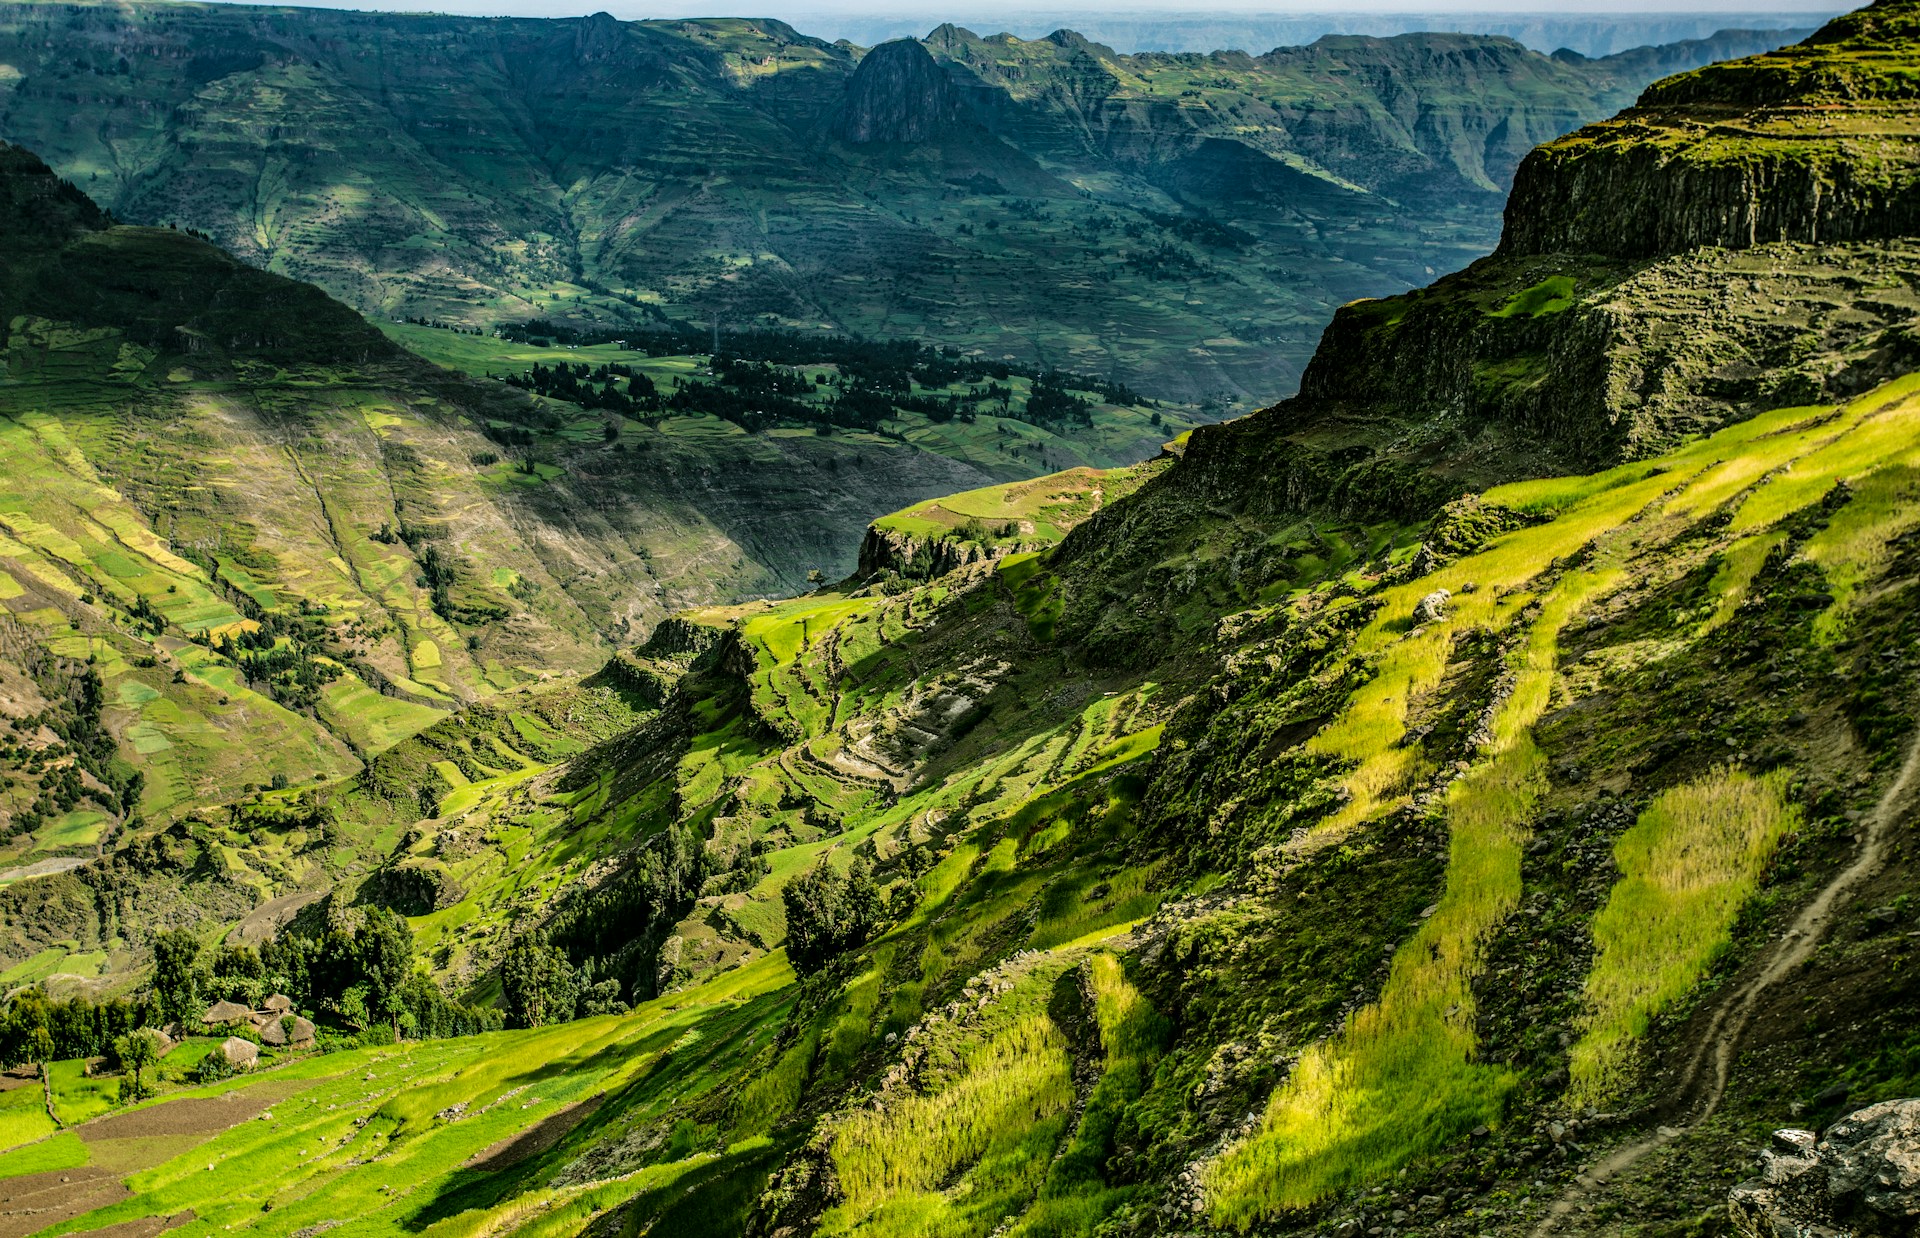 The Ethiopian highlands